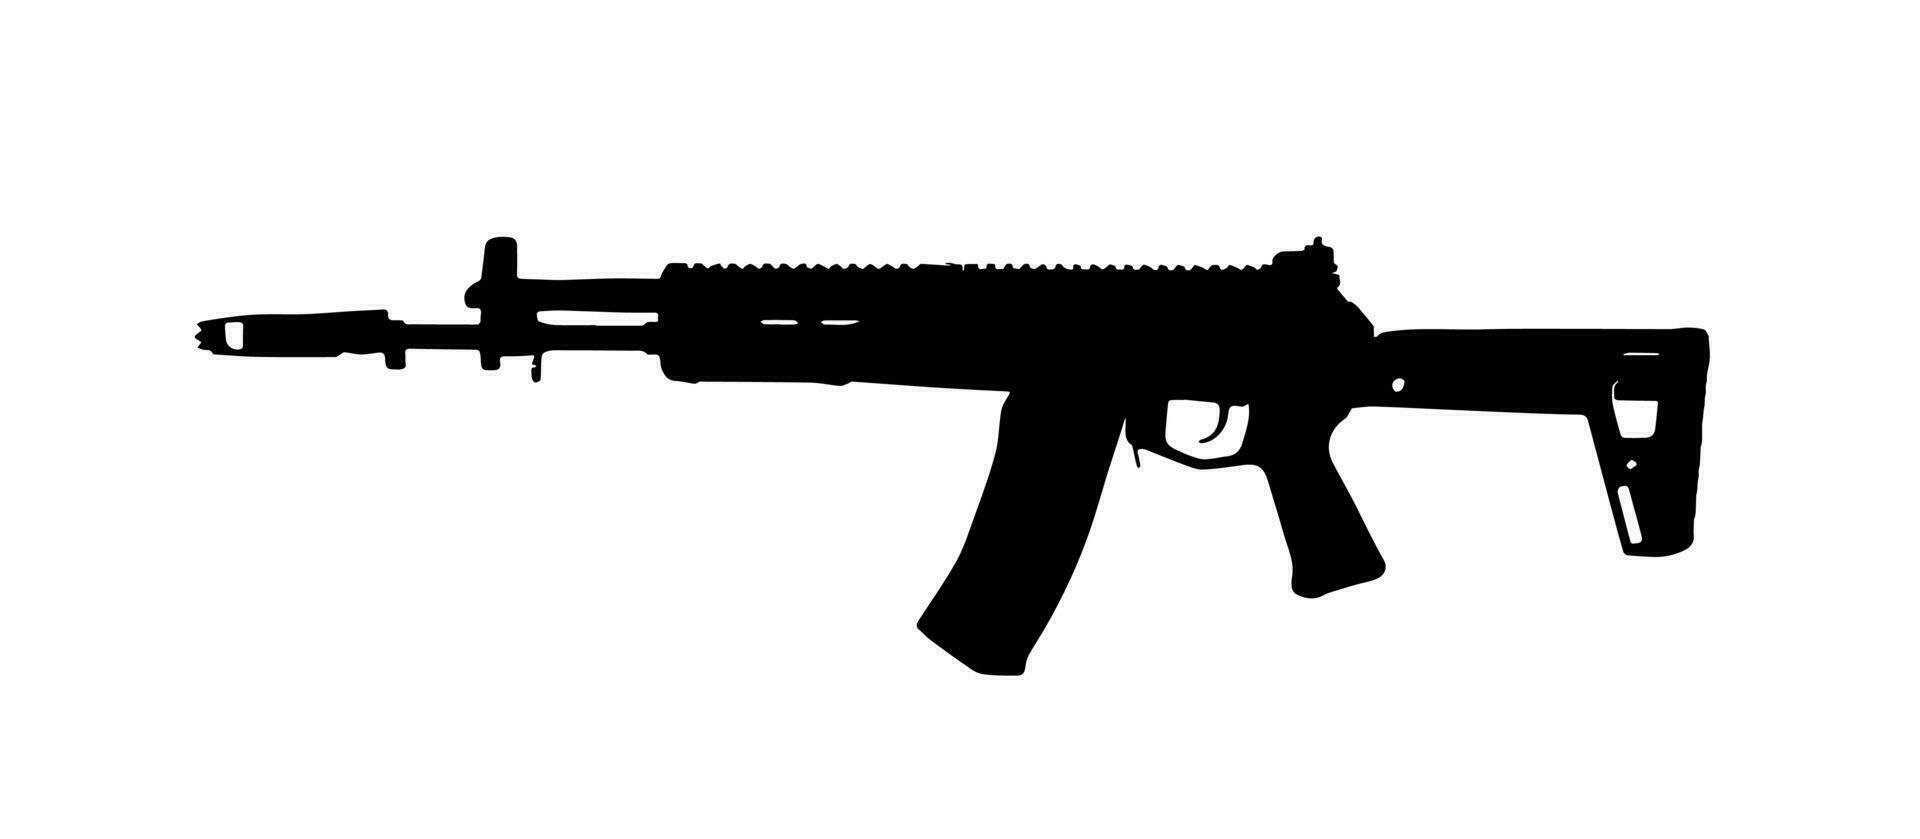 ak-12. wapen. vector silhouet illustratie